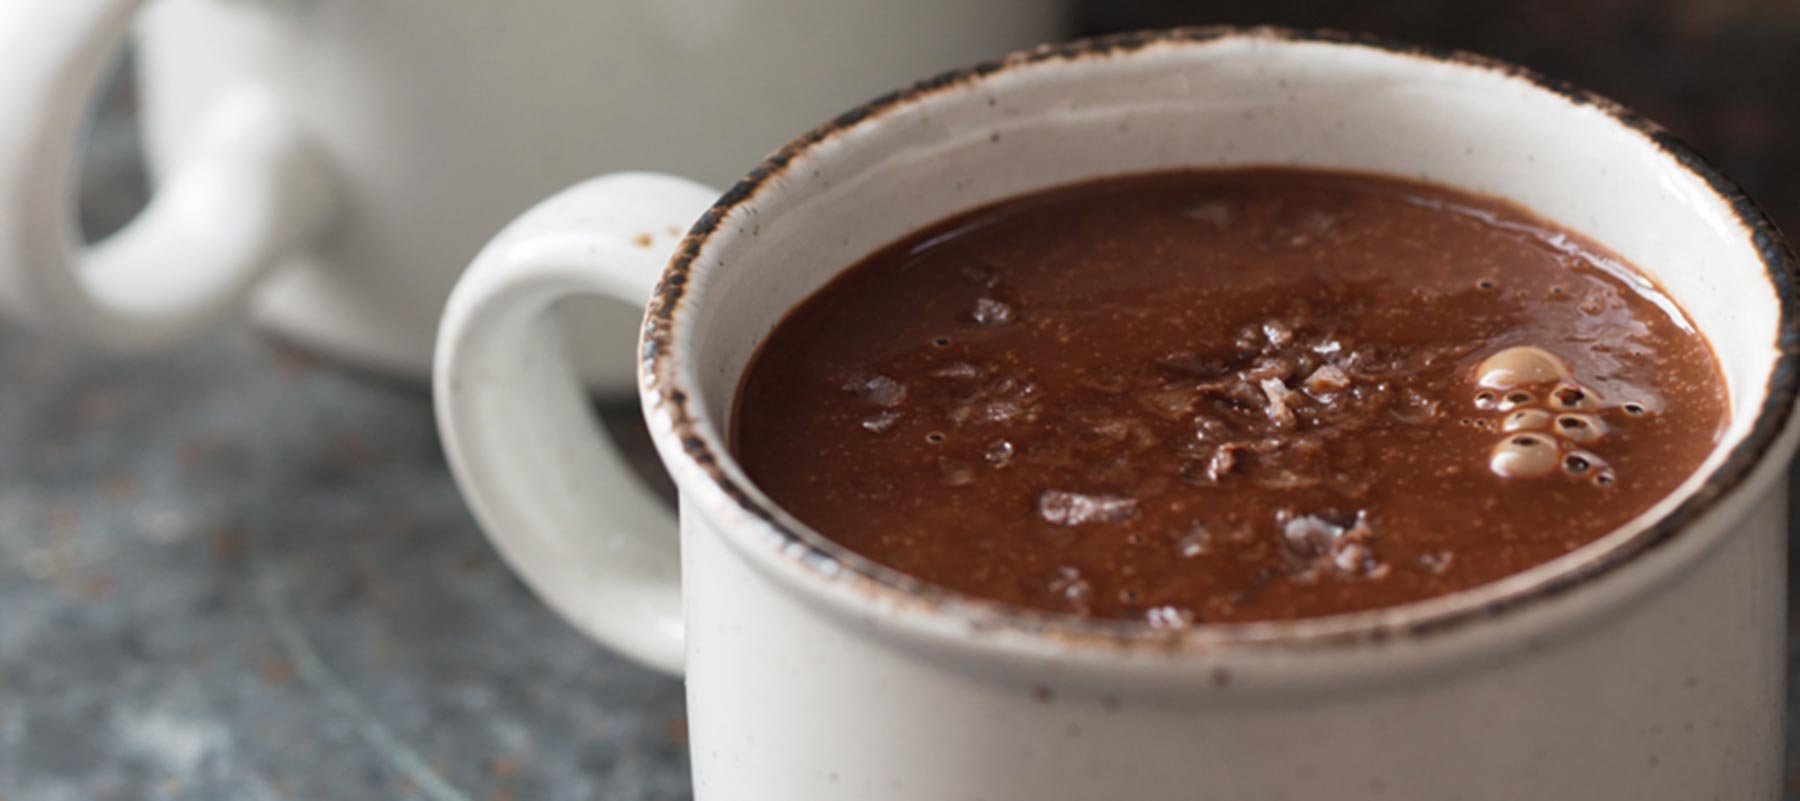 drinking chocolate in a mug with flaky salt